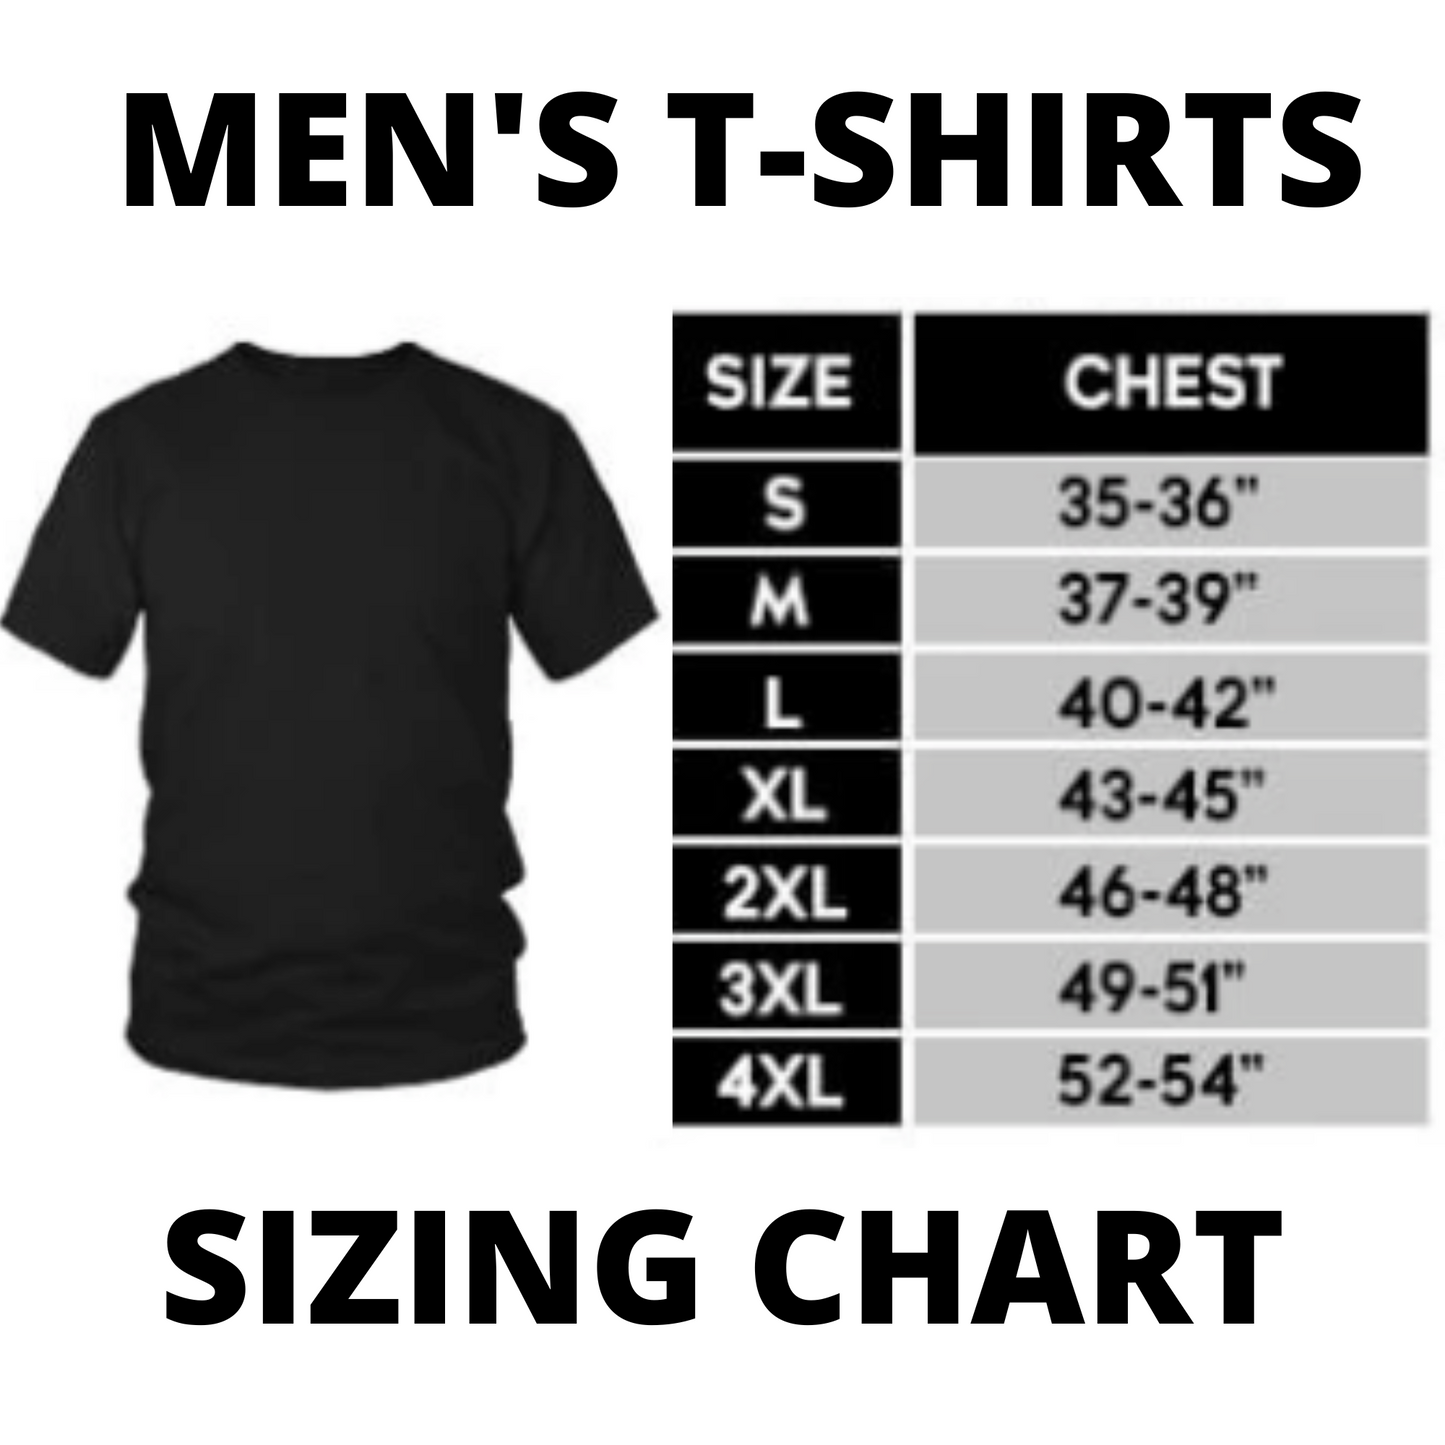 Dirt Track Side Design Men's T-Shirt